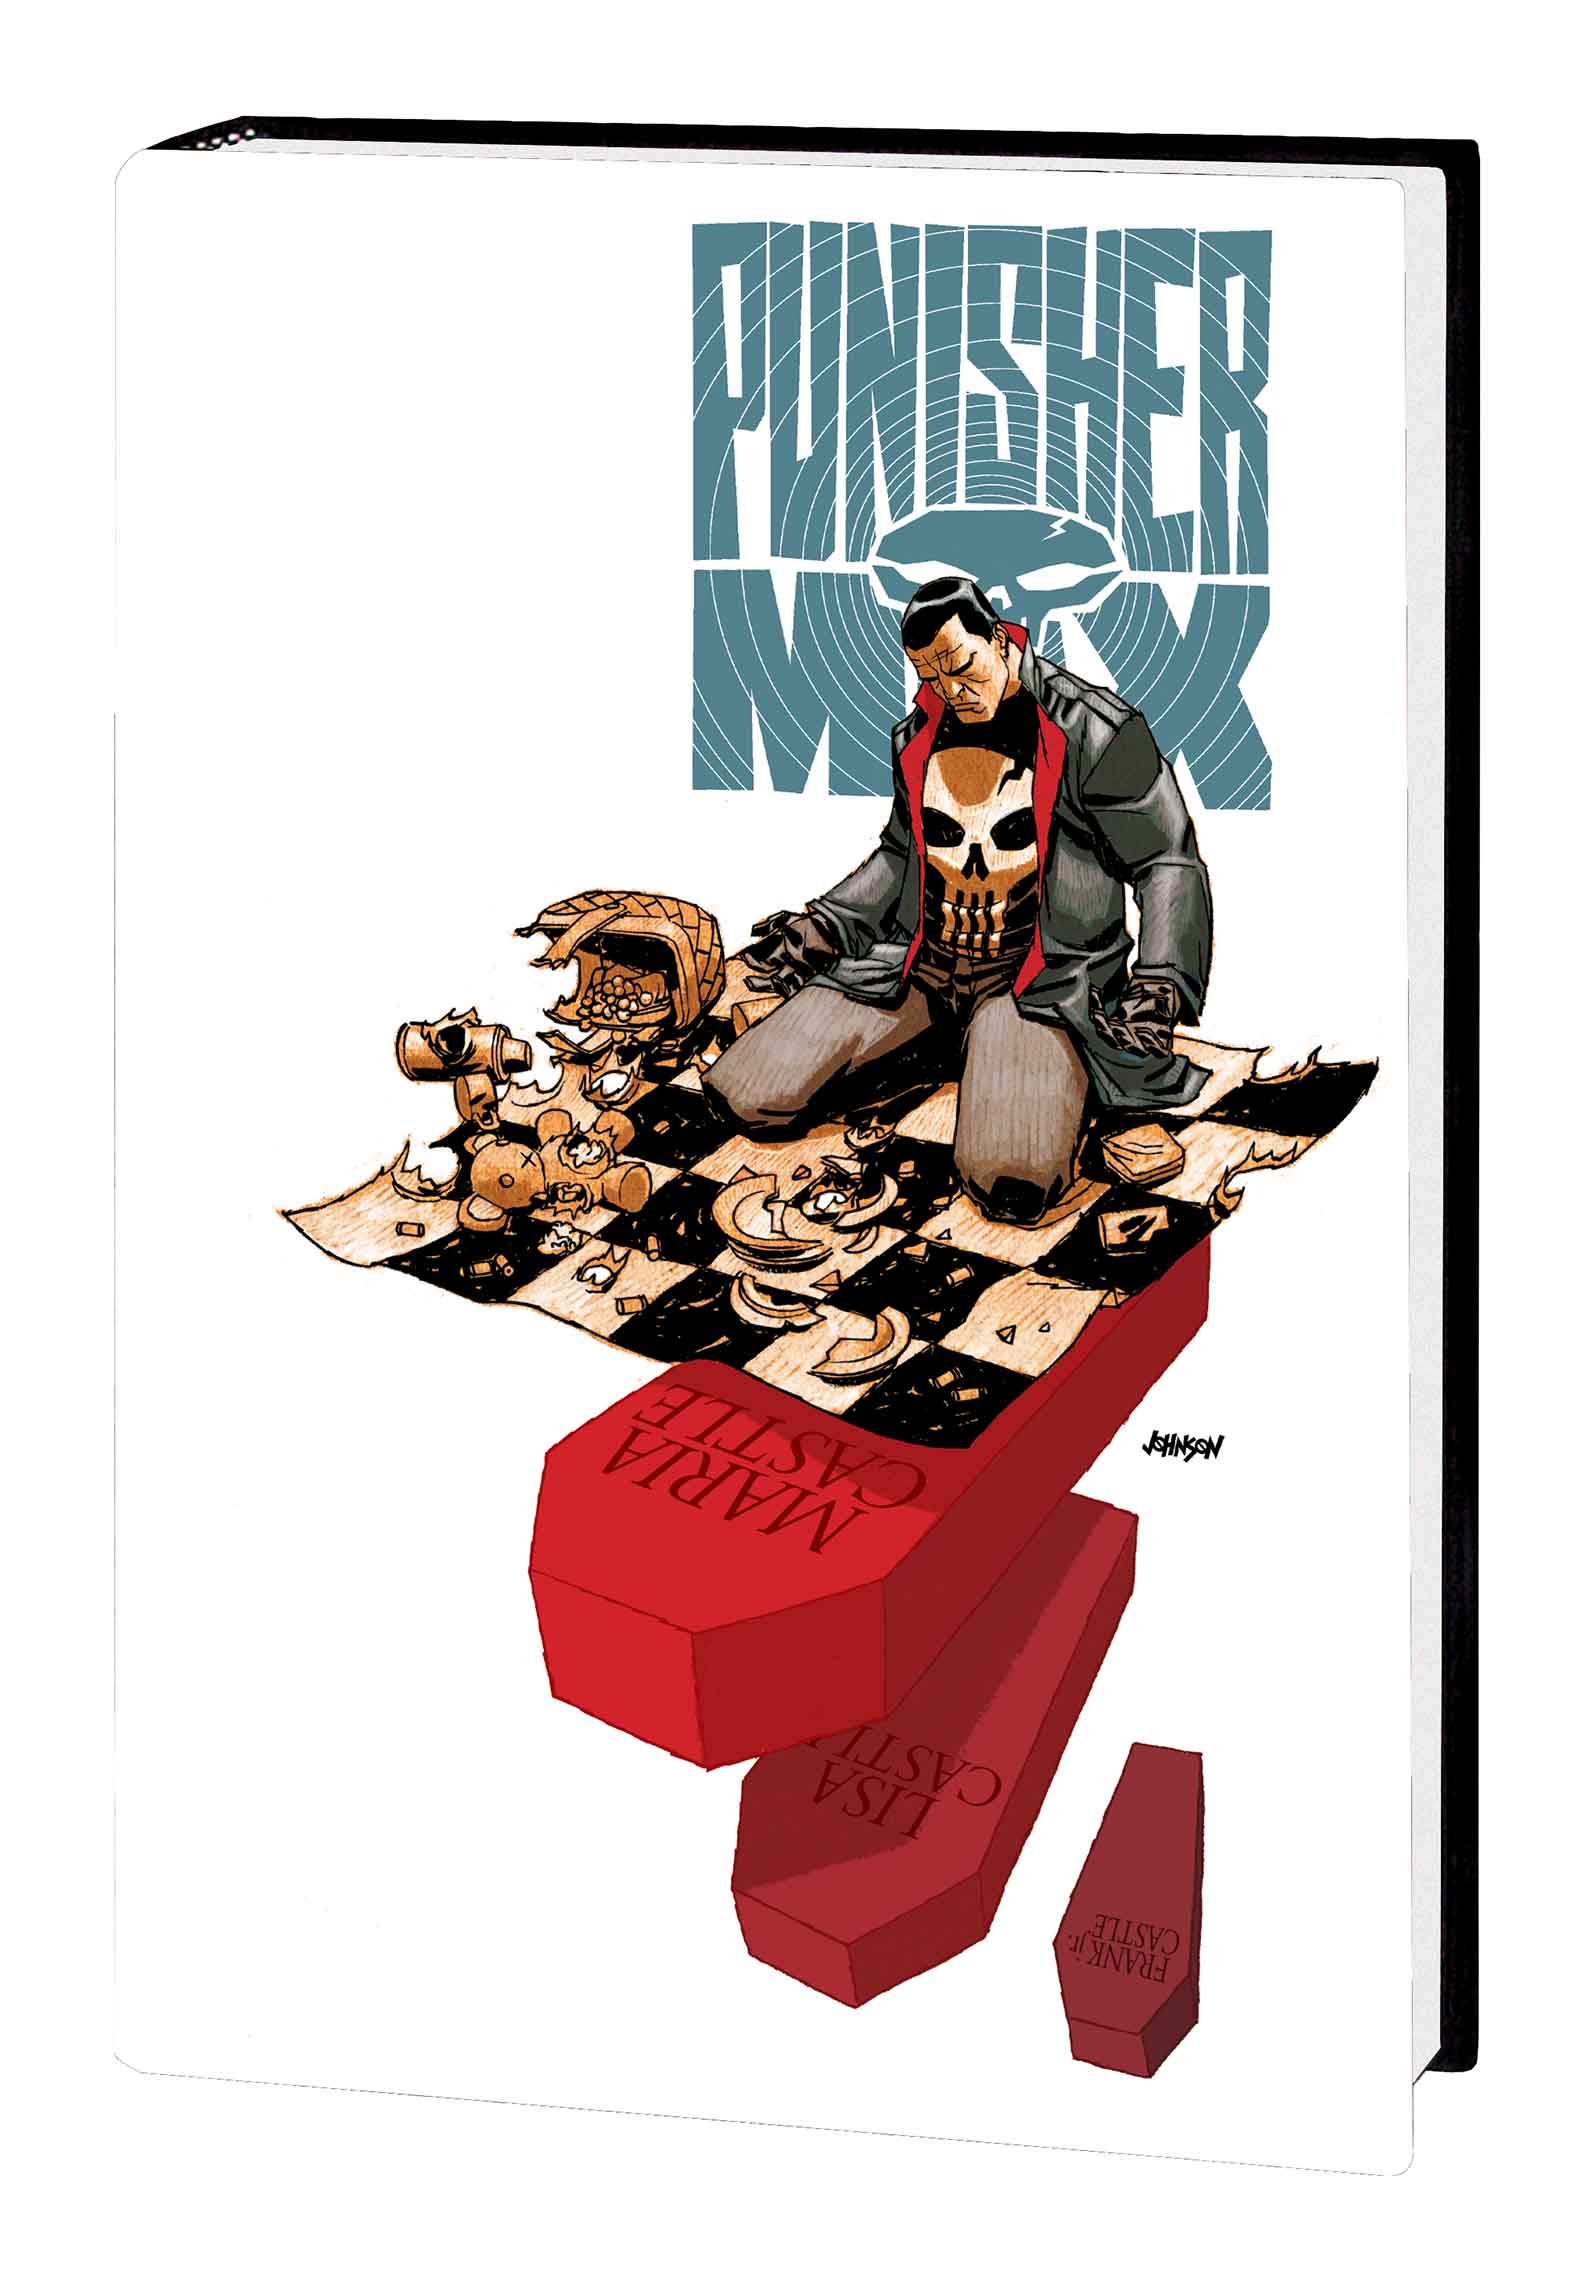 PUNISHER MAX BY JASON AARON & STEVE DILLON OMNIBUS HC (Hardcover)